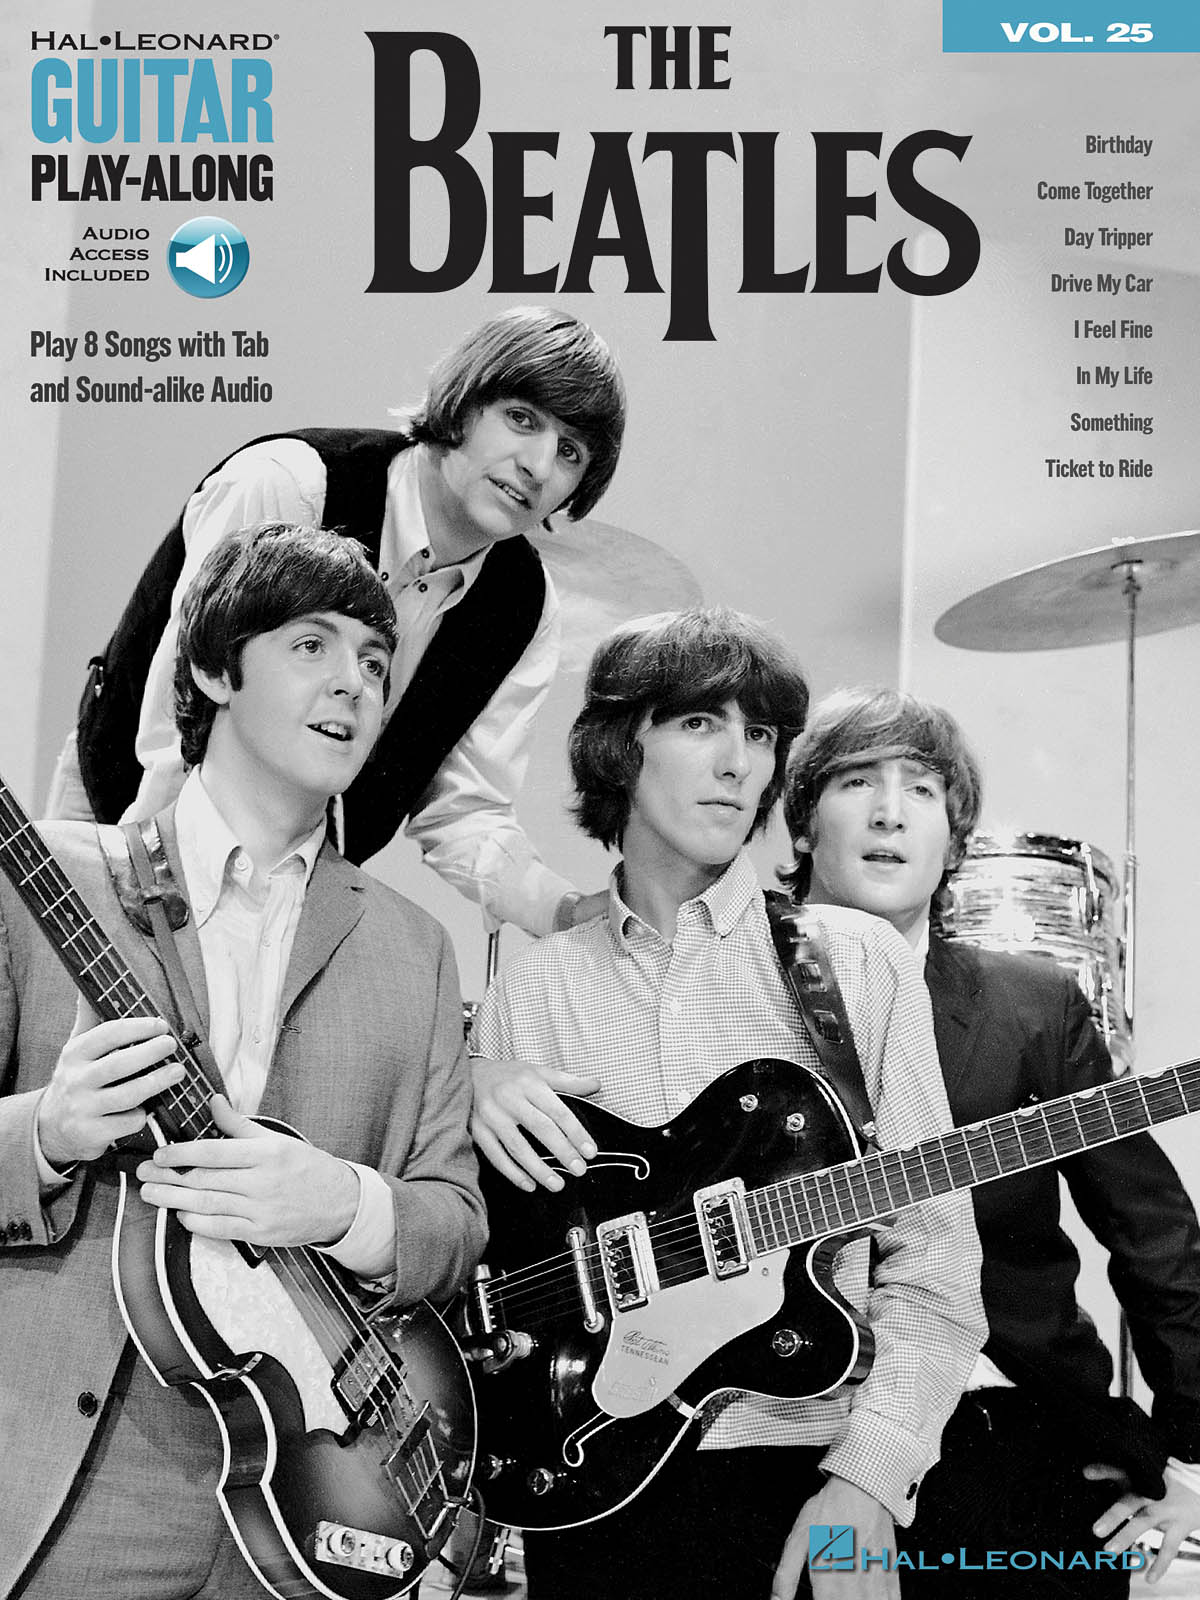 Hal Leonard Guitar Play-Along Vol. 25 The Beatles